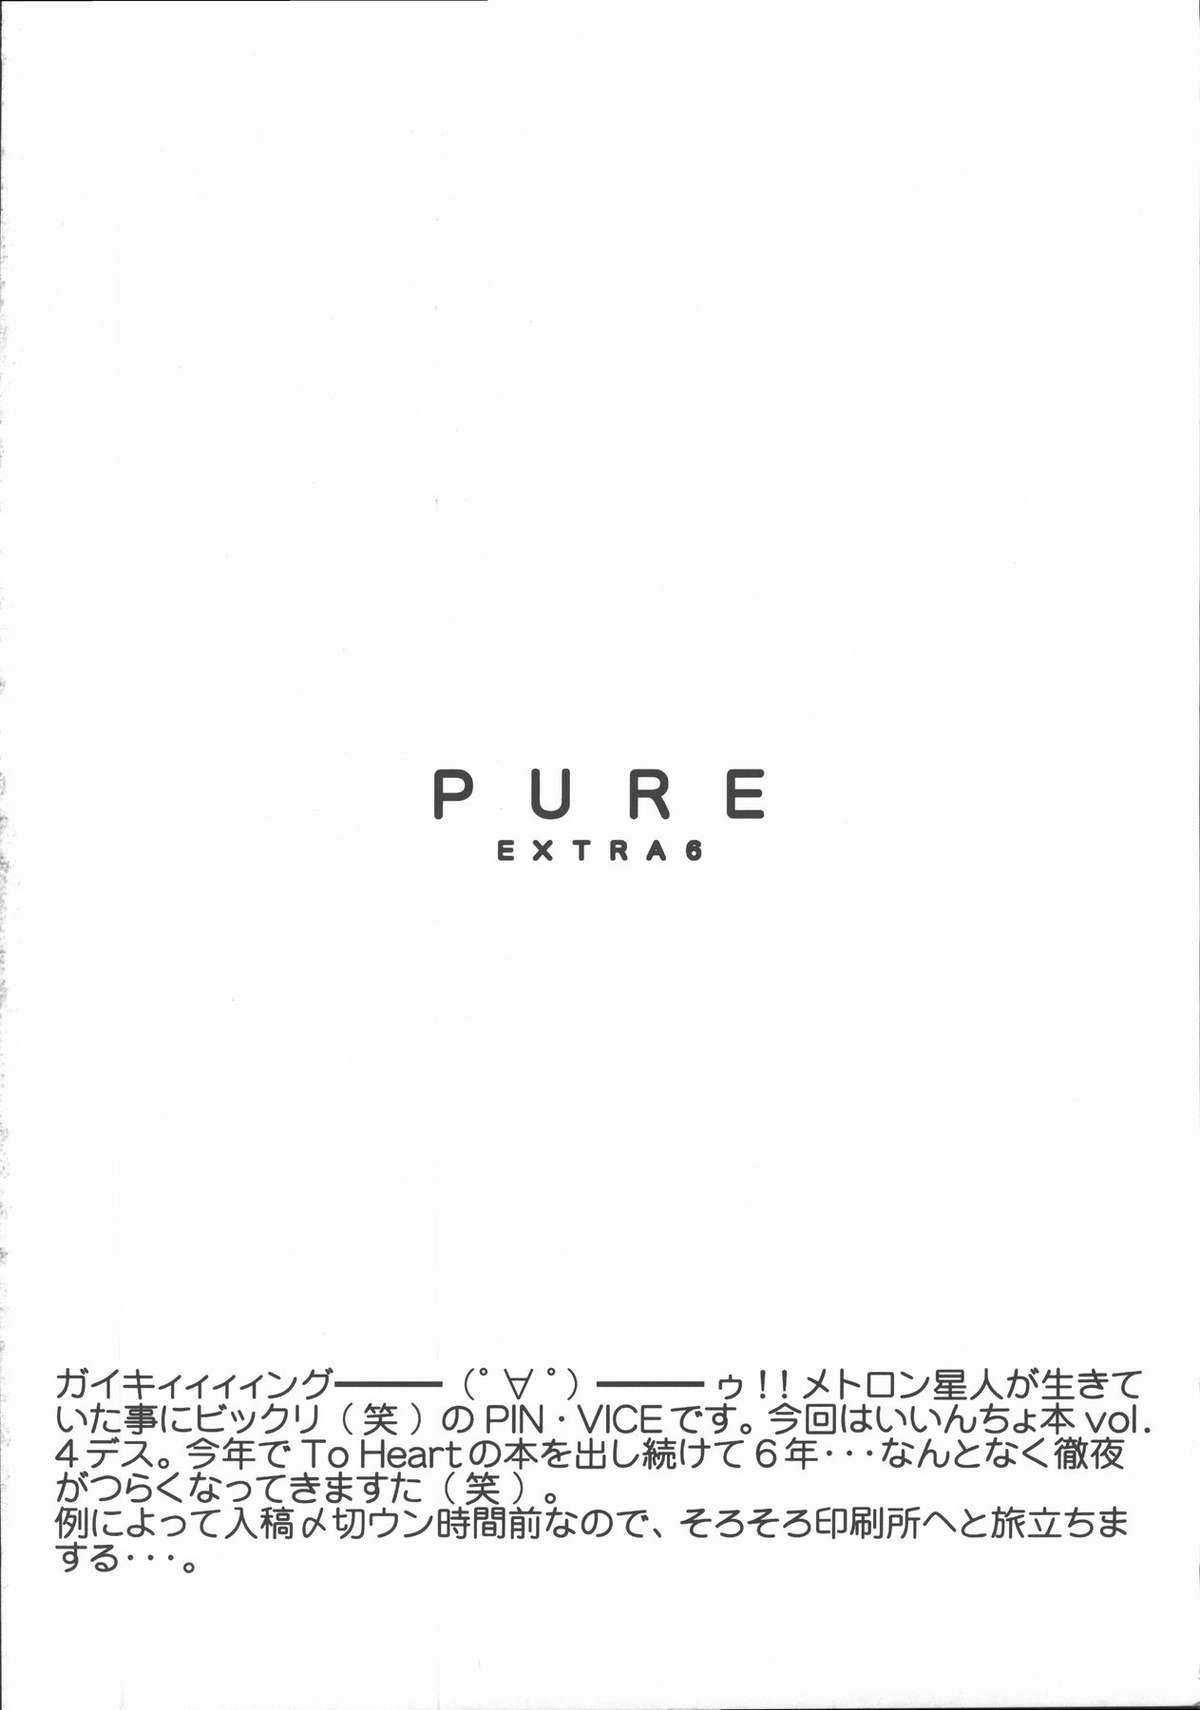 (同人誌) [下僕出版] PURE EXTRA 6 (Toheart) 